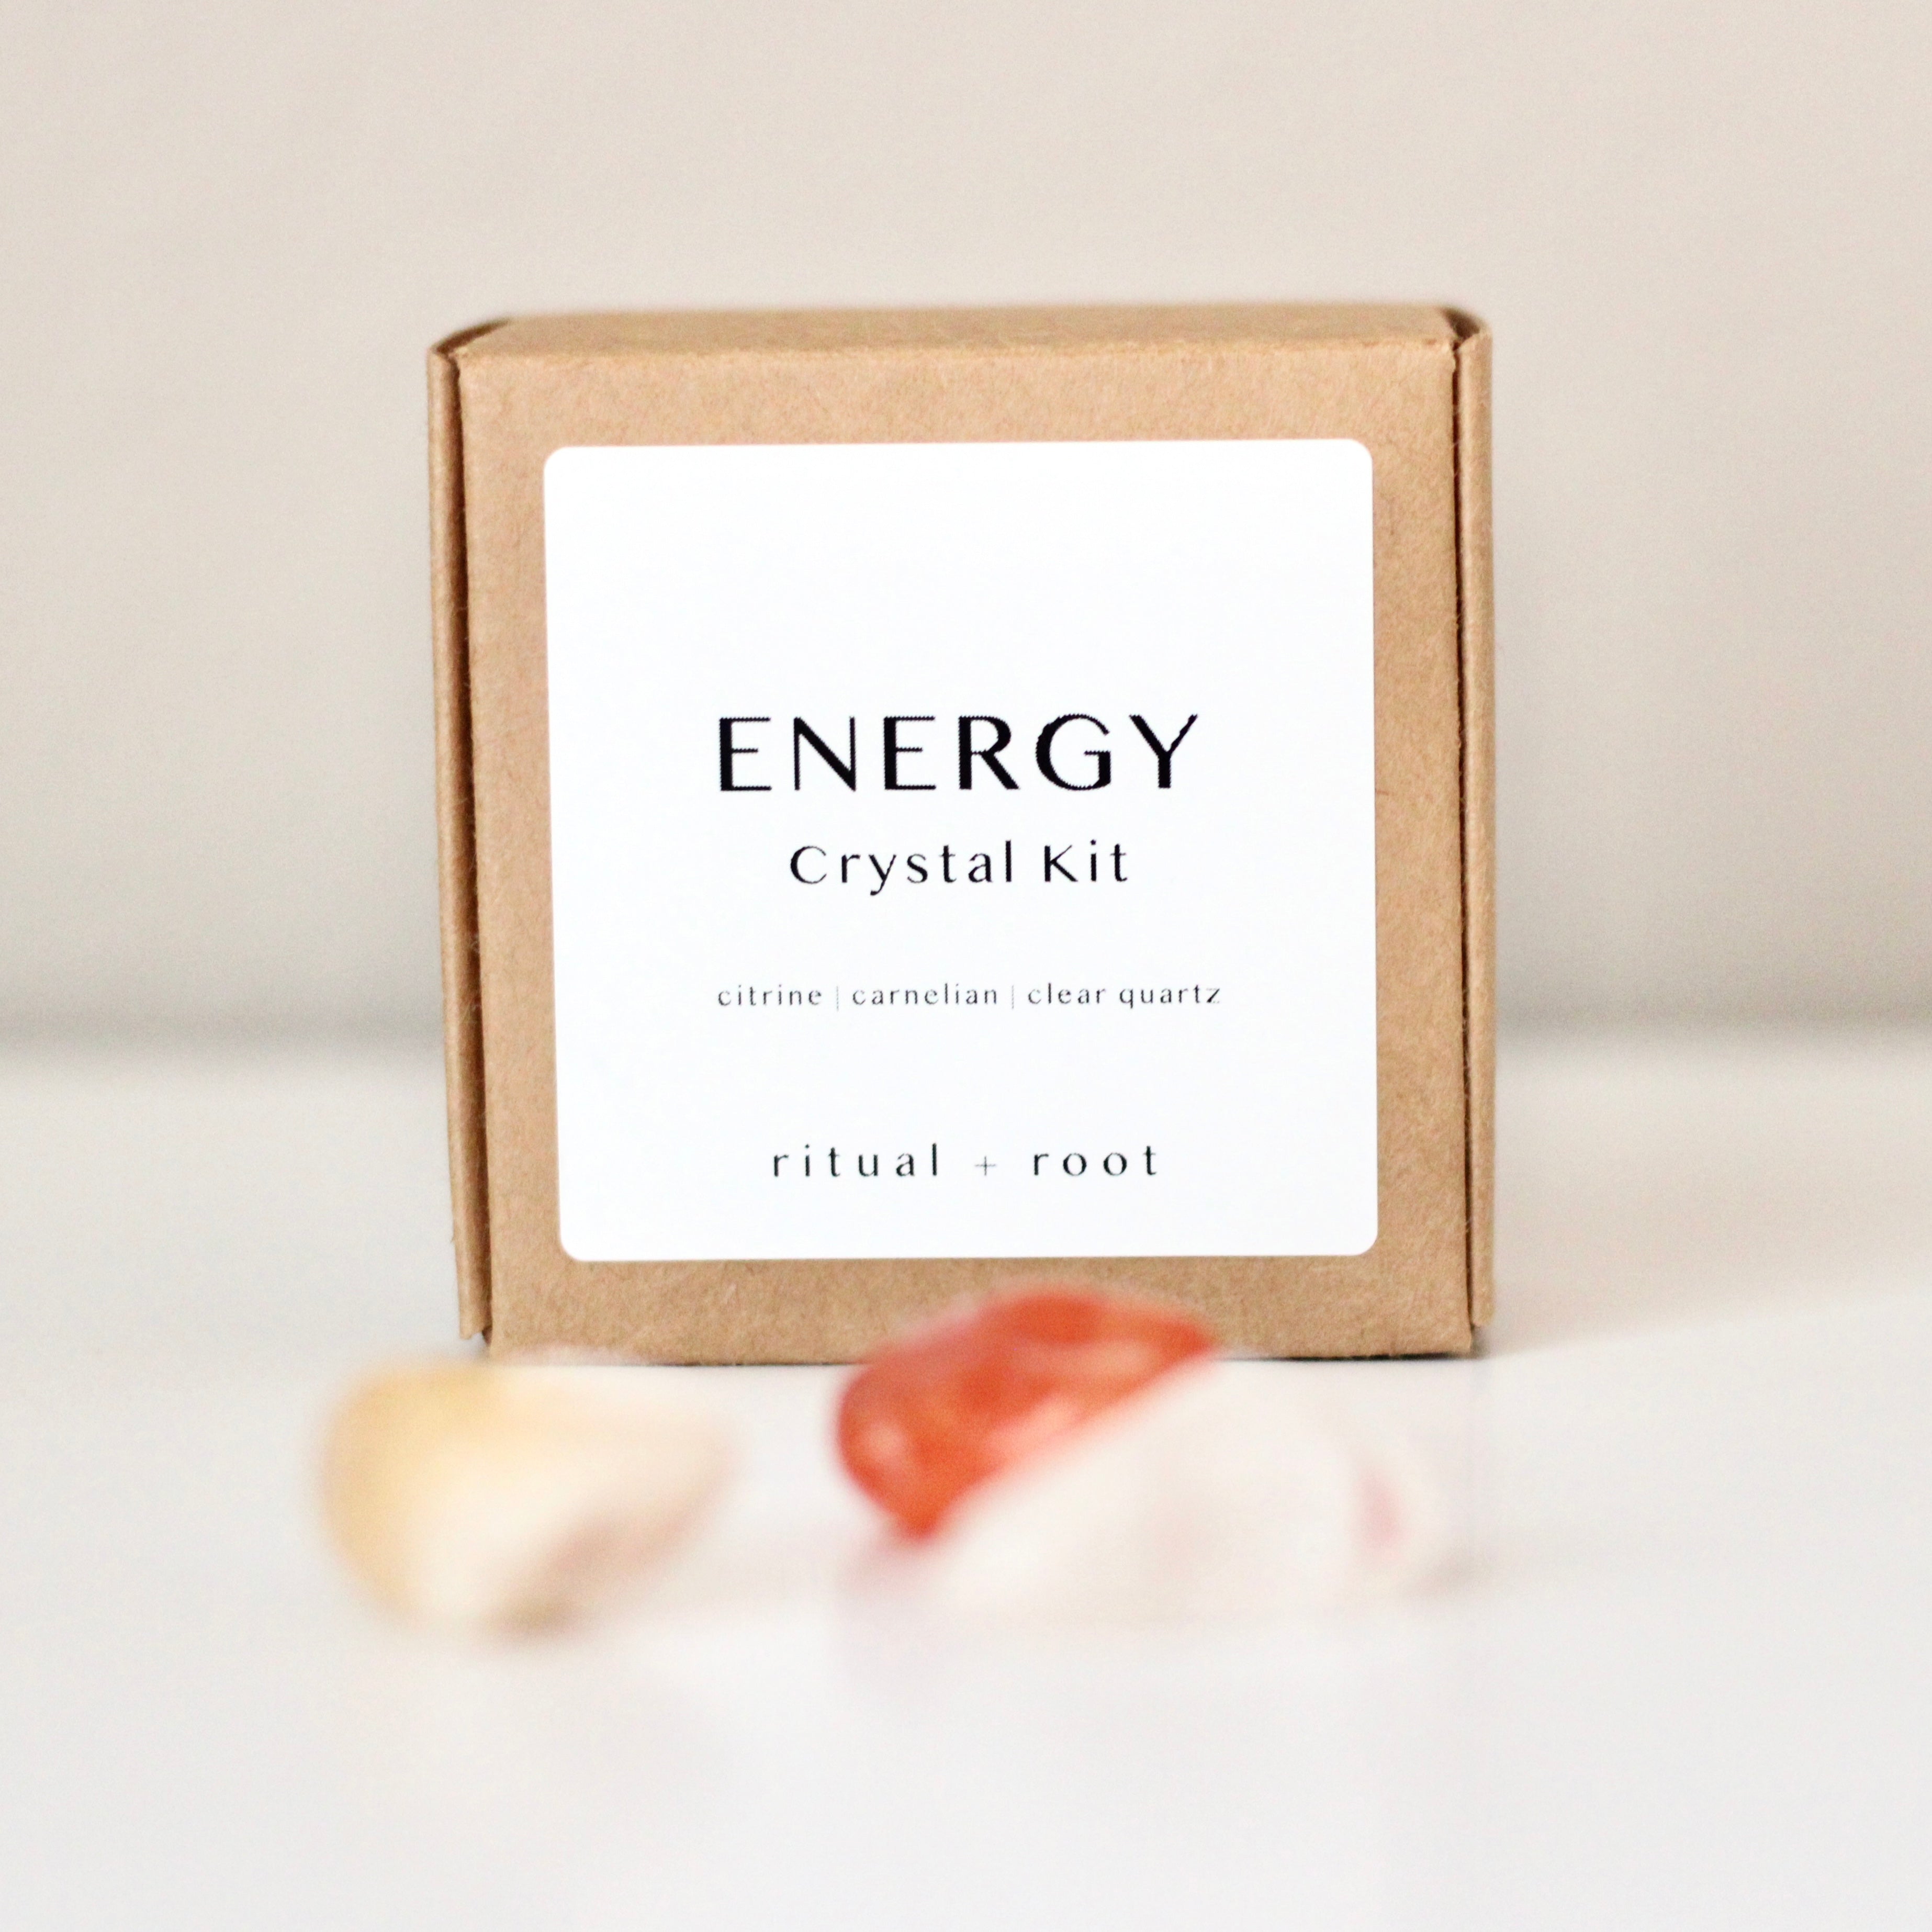 ENERGY Crystal Kit